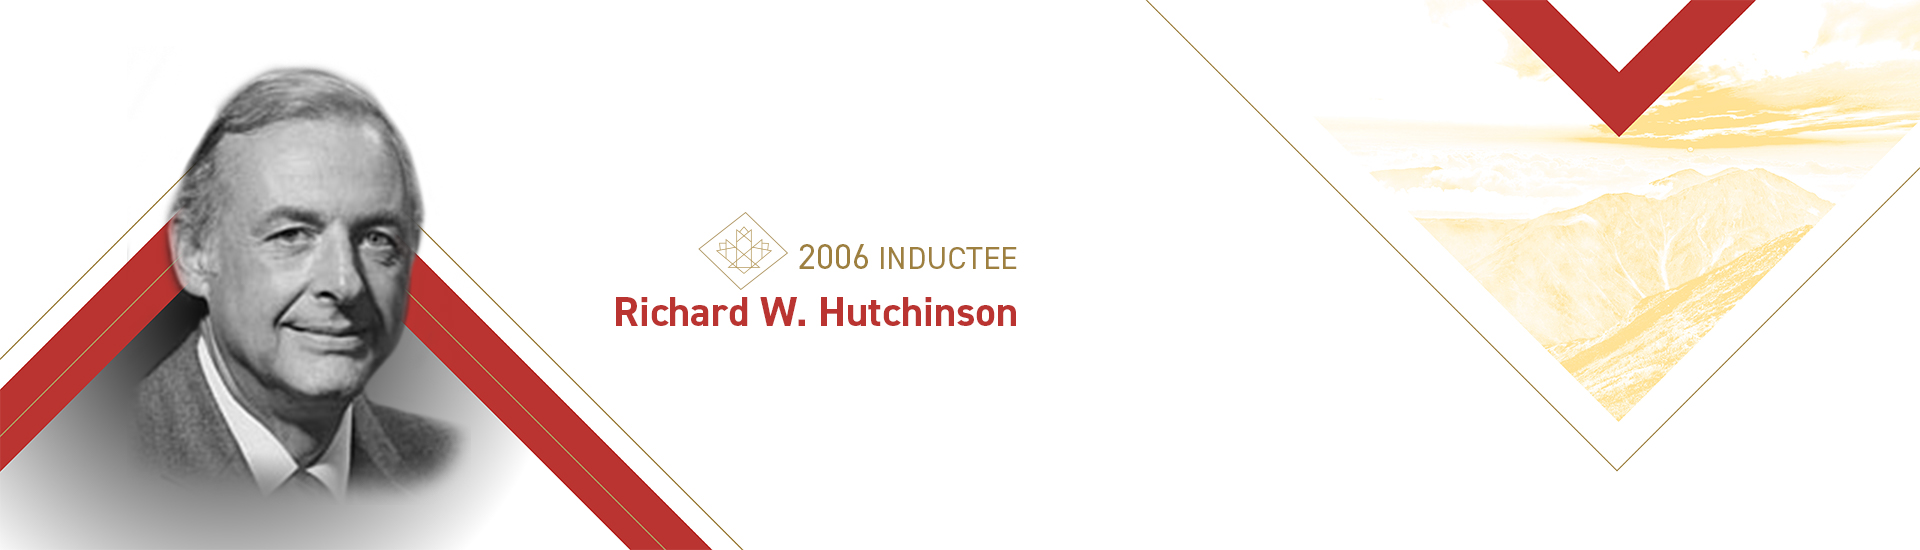 Richard W. Hutchinson (1928 – 2016)